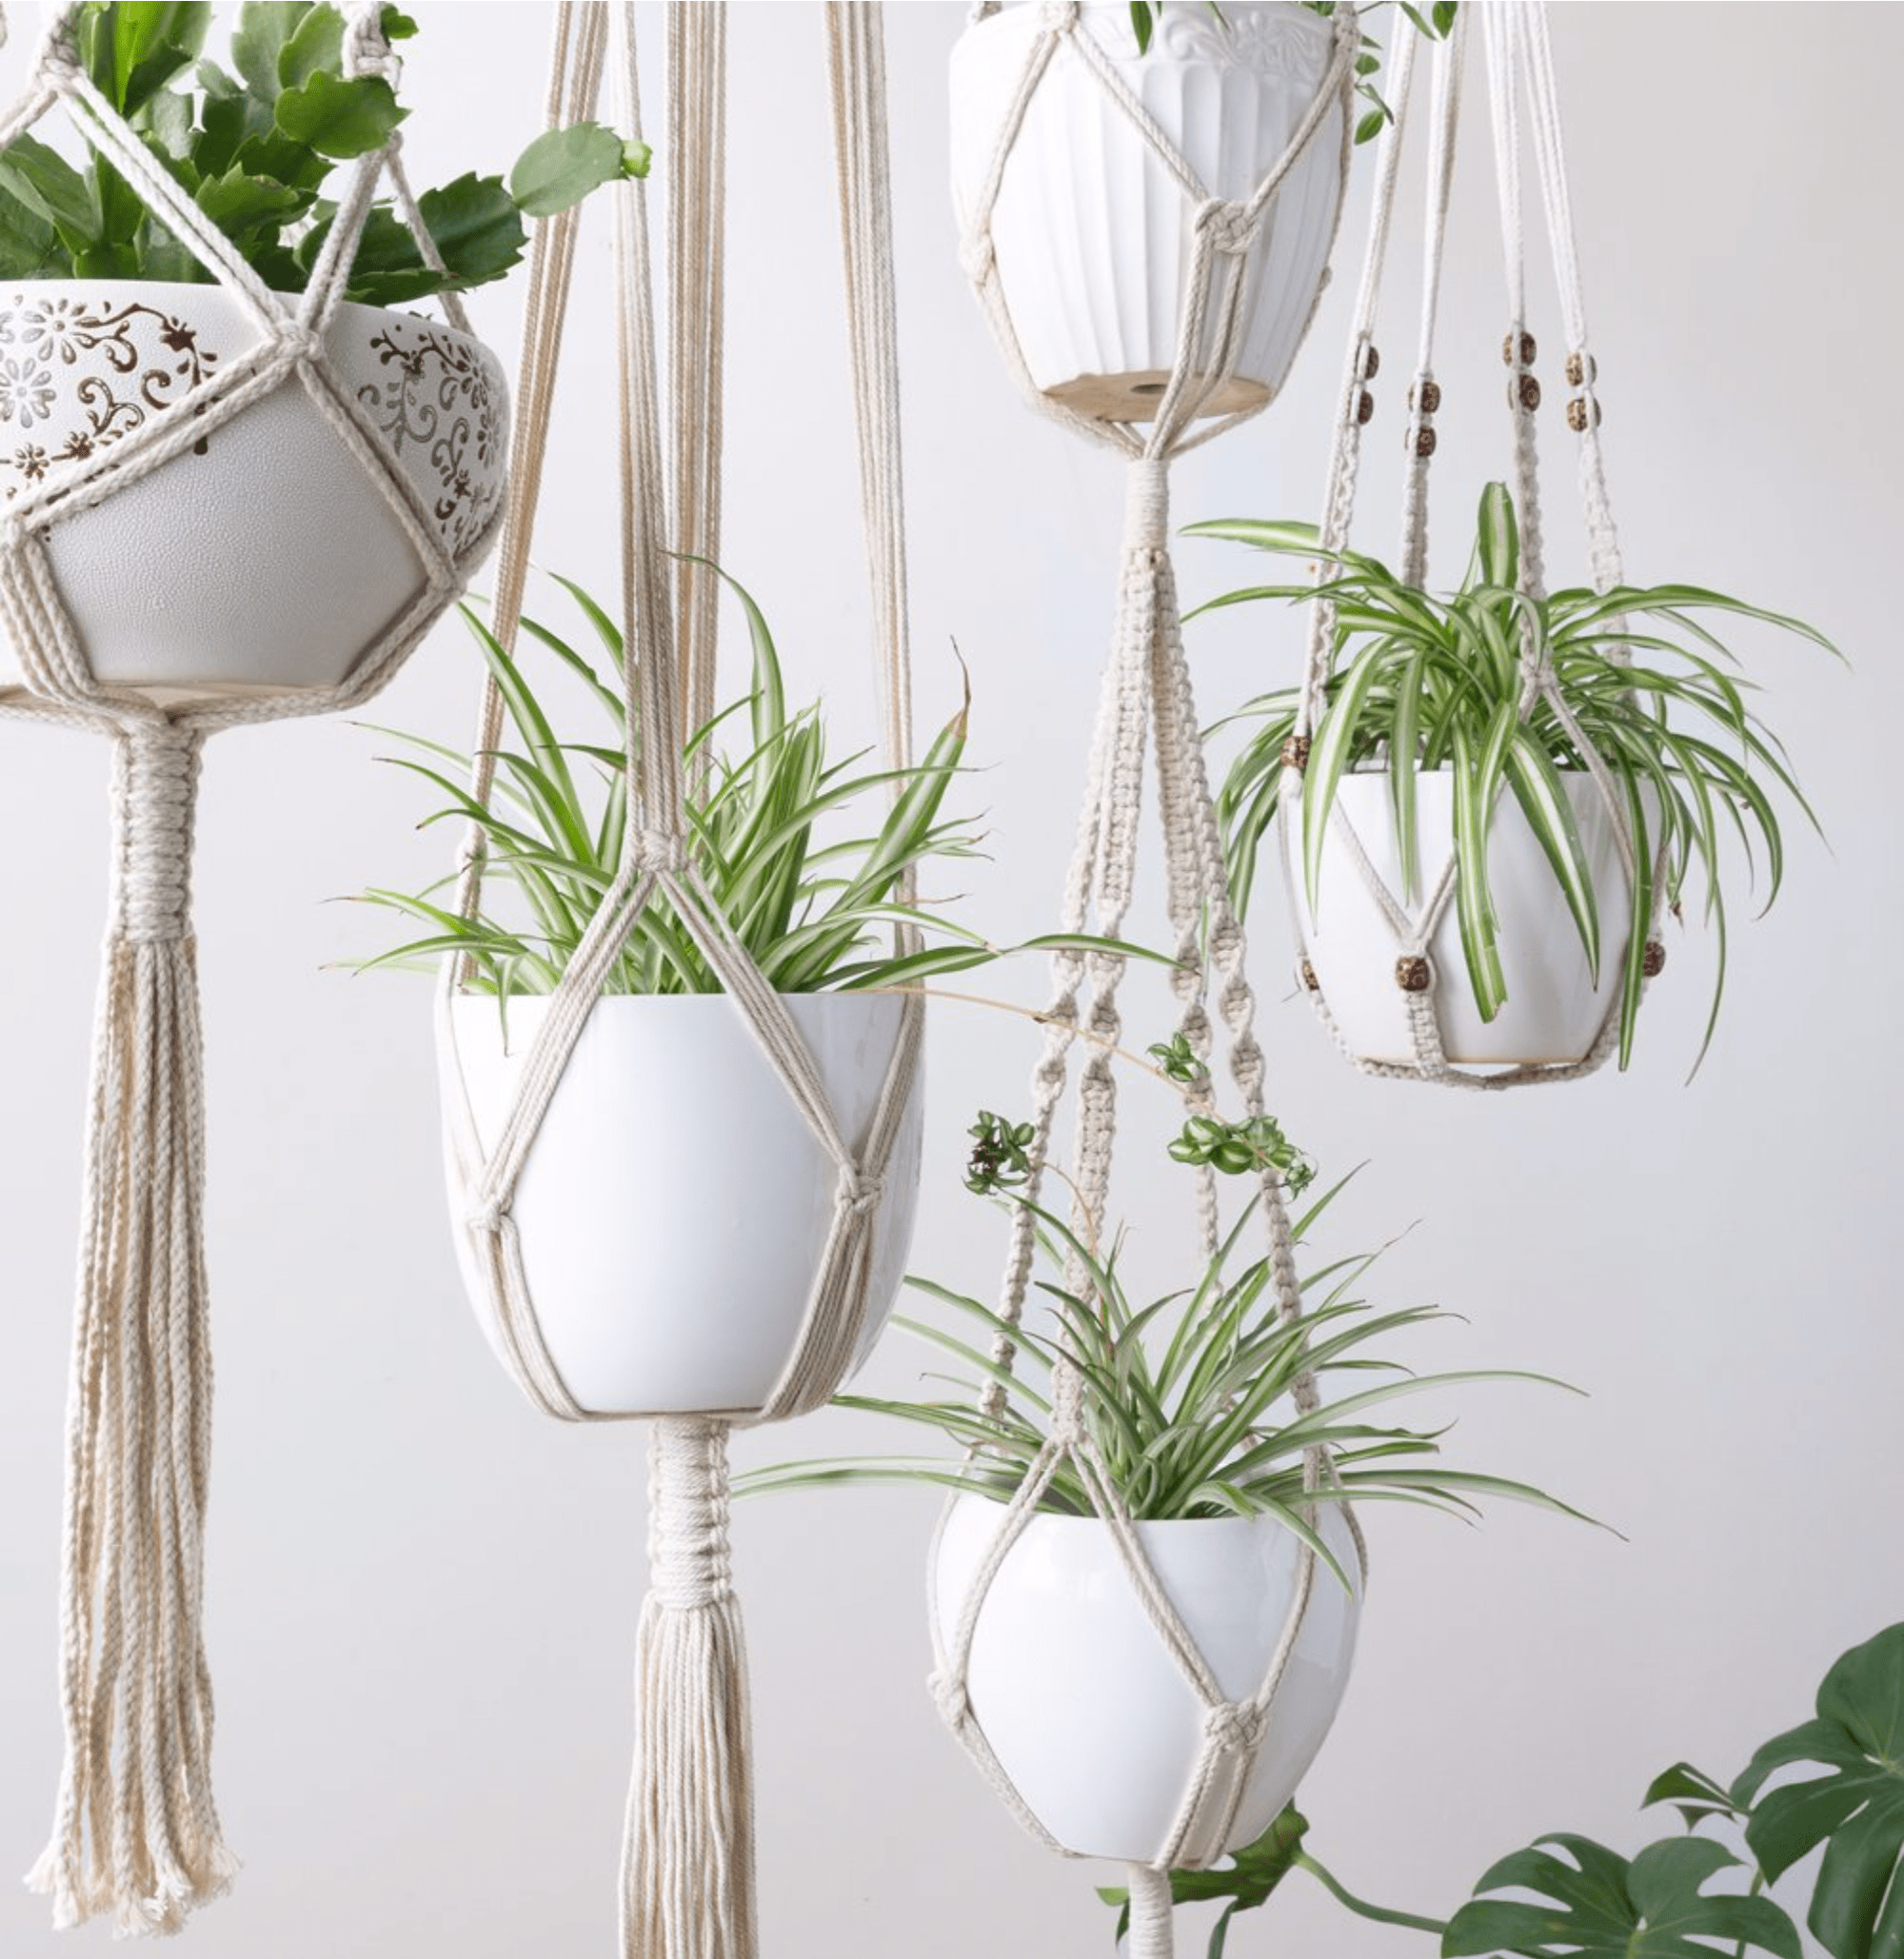 Vase Hanger with Plants